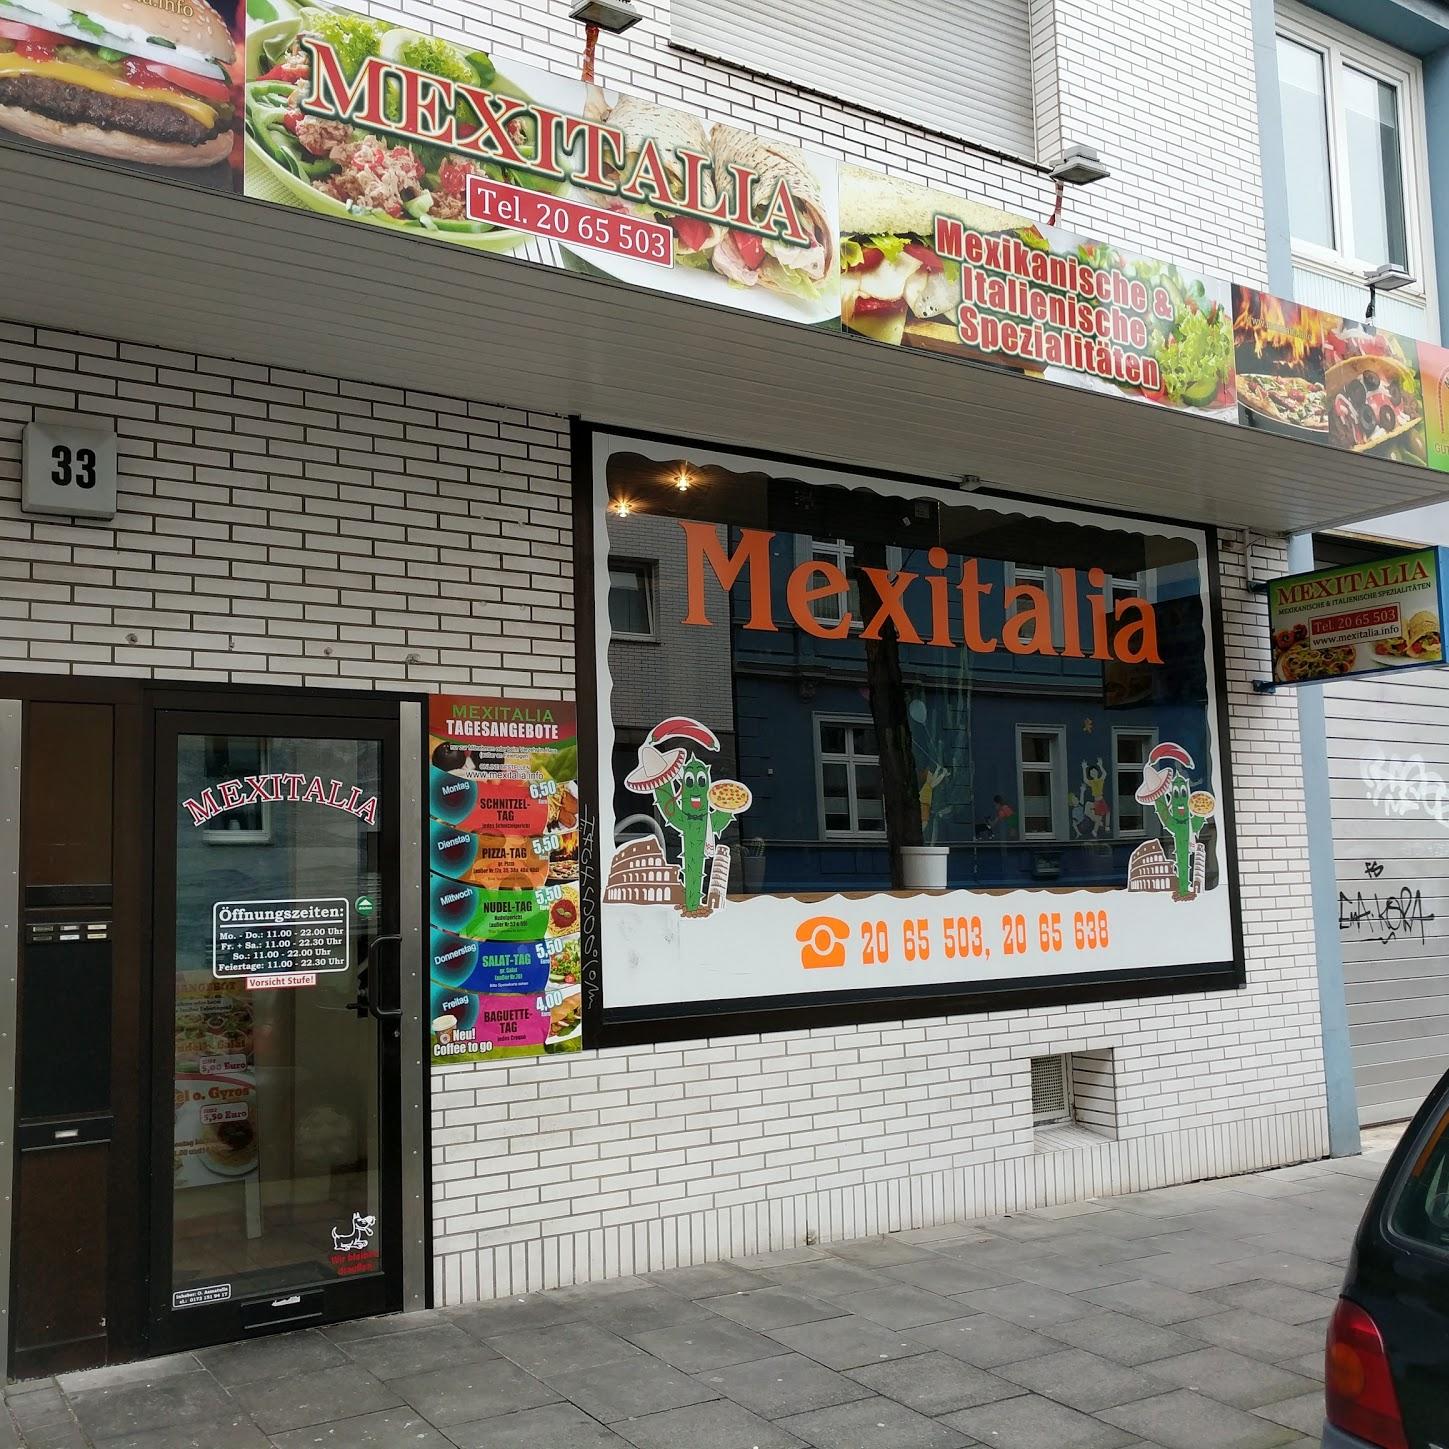 Restaurant "Mexitalia" in Dortmund